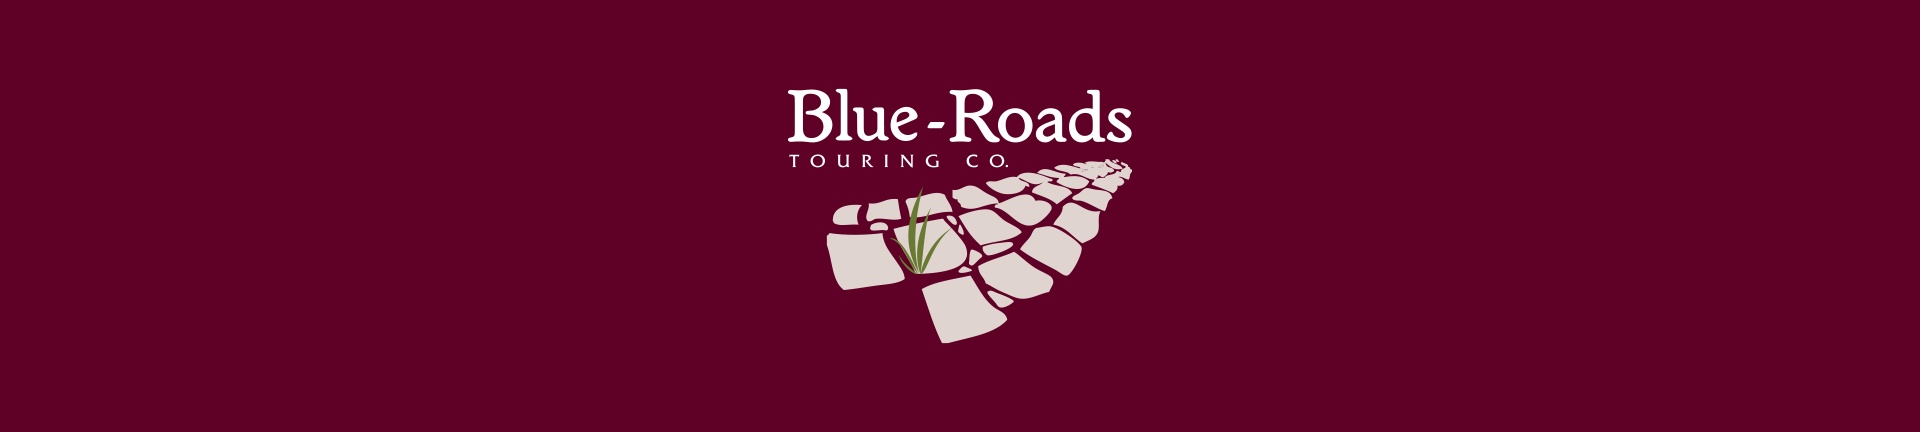 Blue-Roads Touring